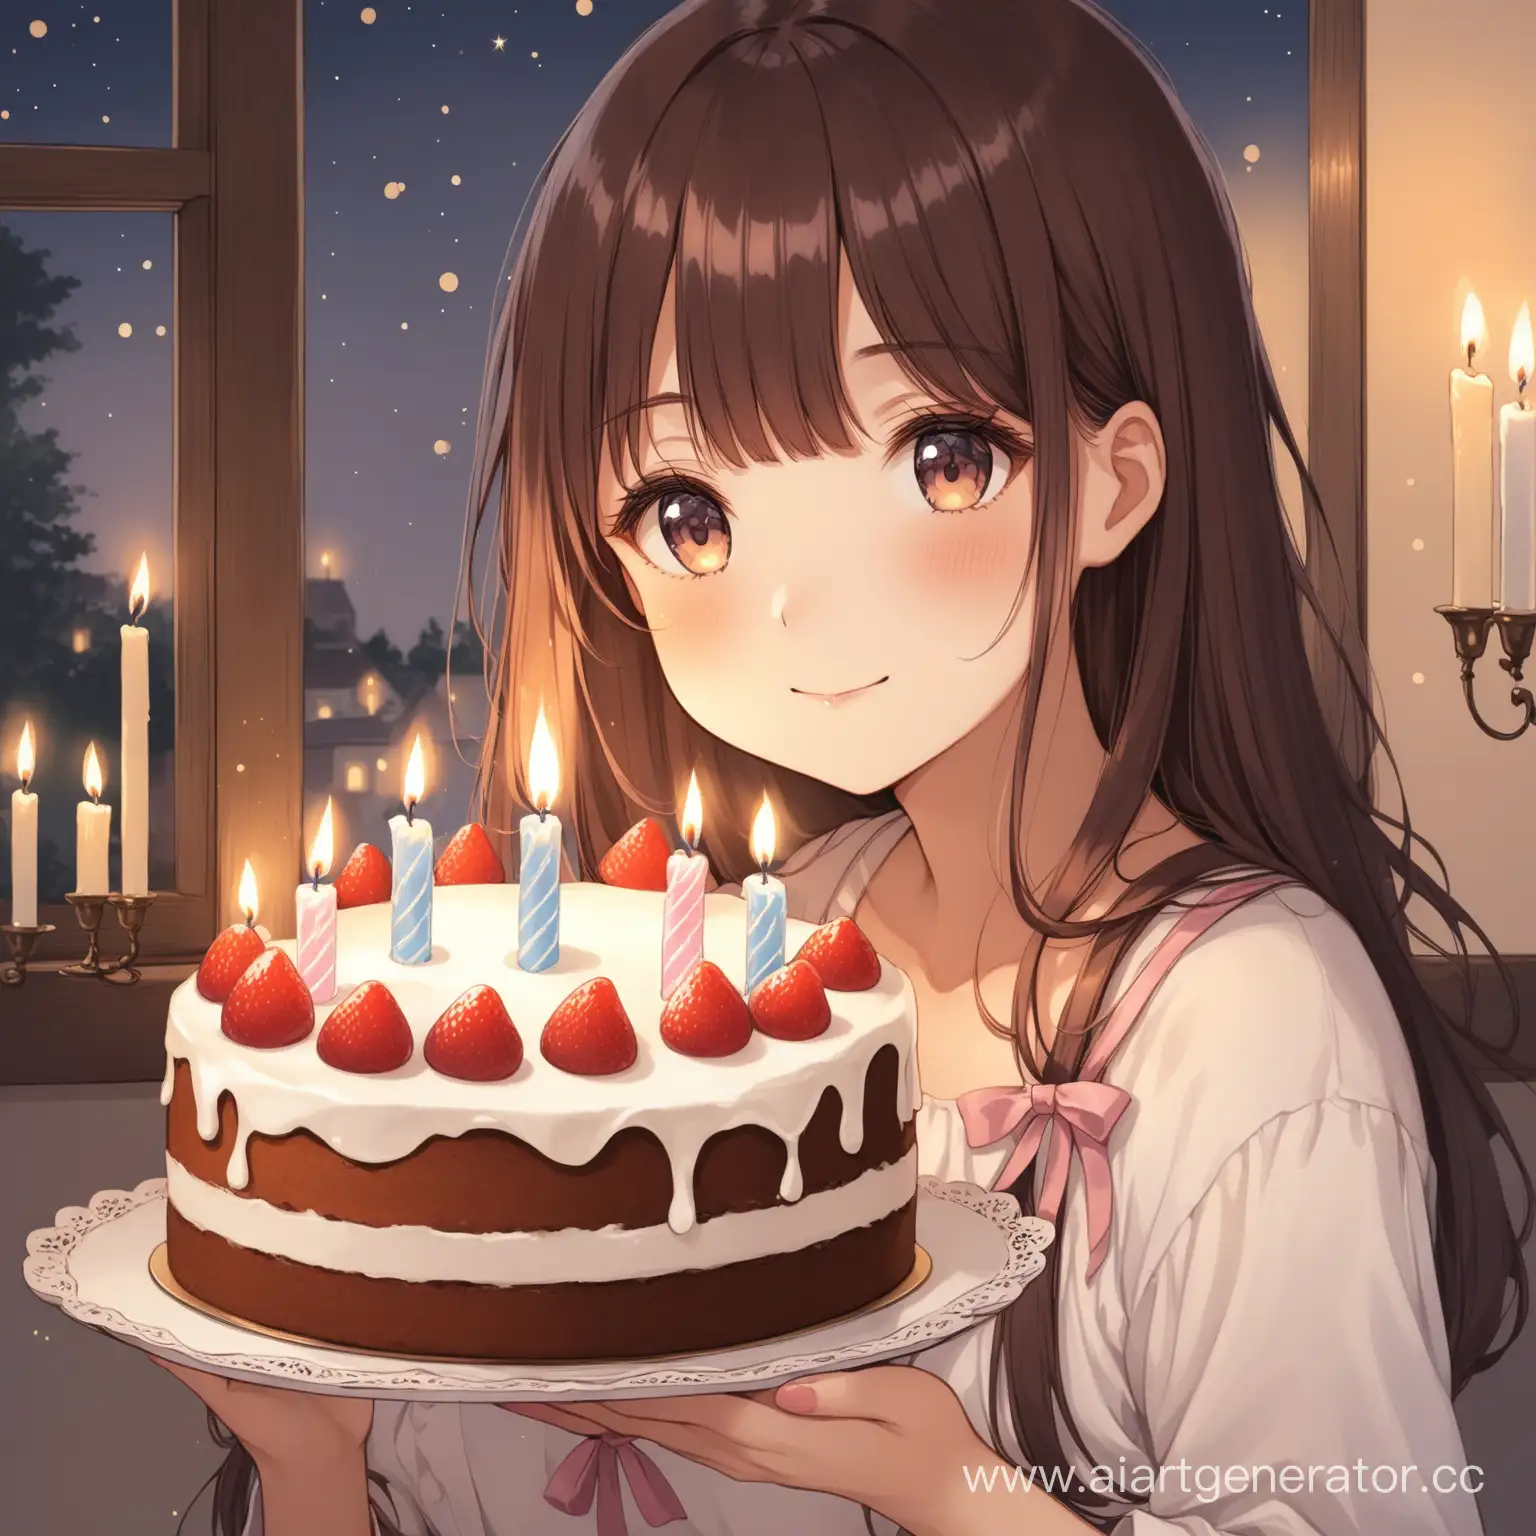 Joyful-Birthday-Celebration-with-a-Young-Girl-Holding-a-Cake